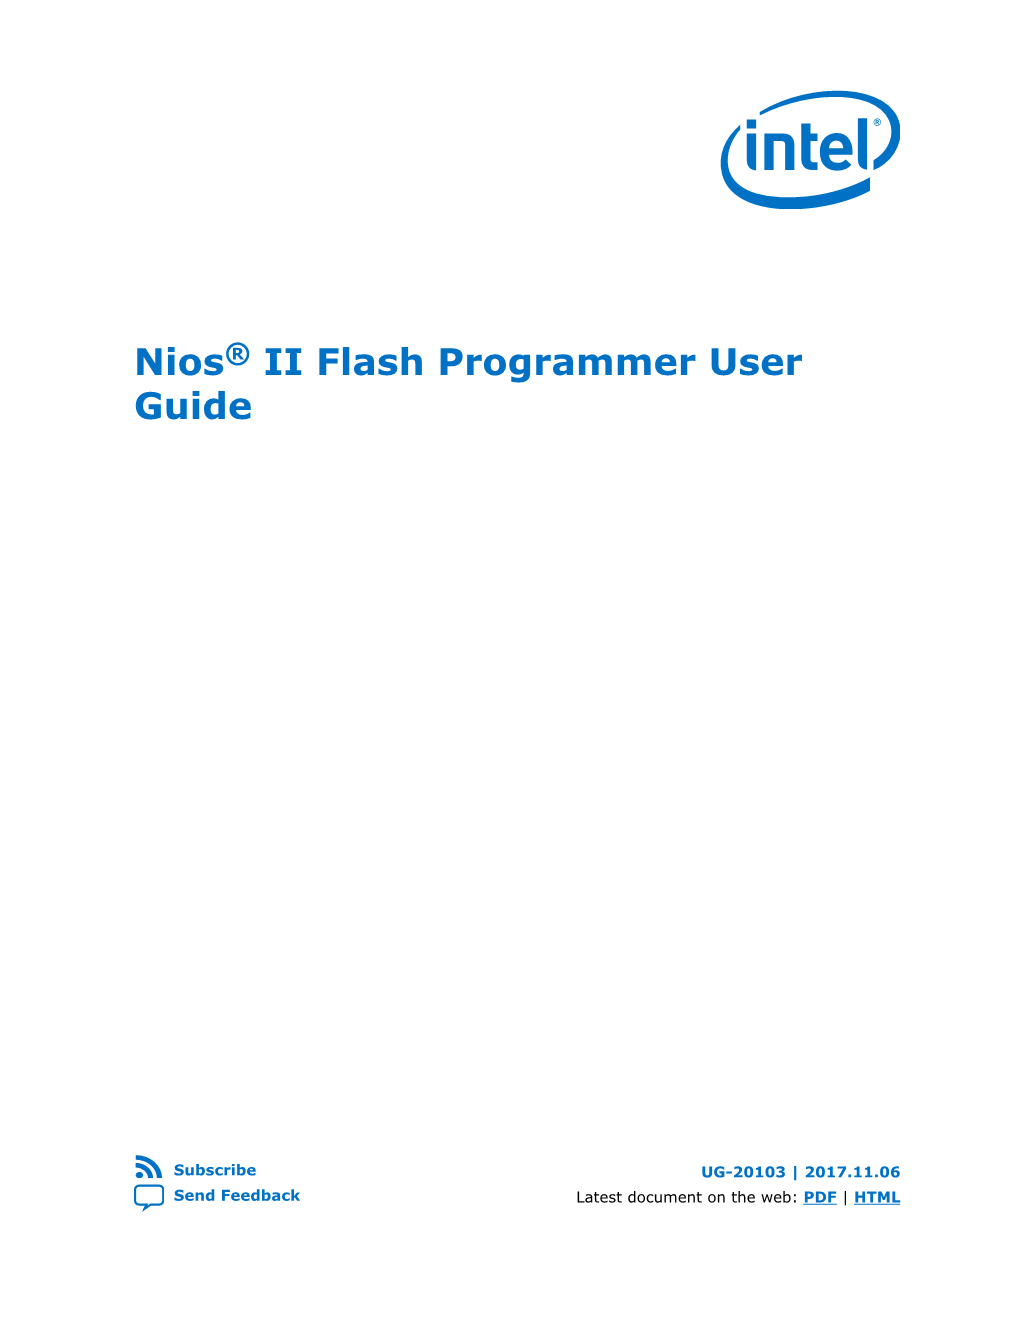 Nios® II Flash Programmer User Guide